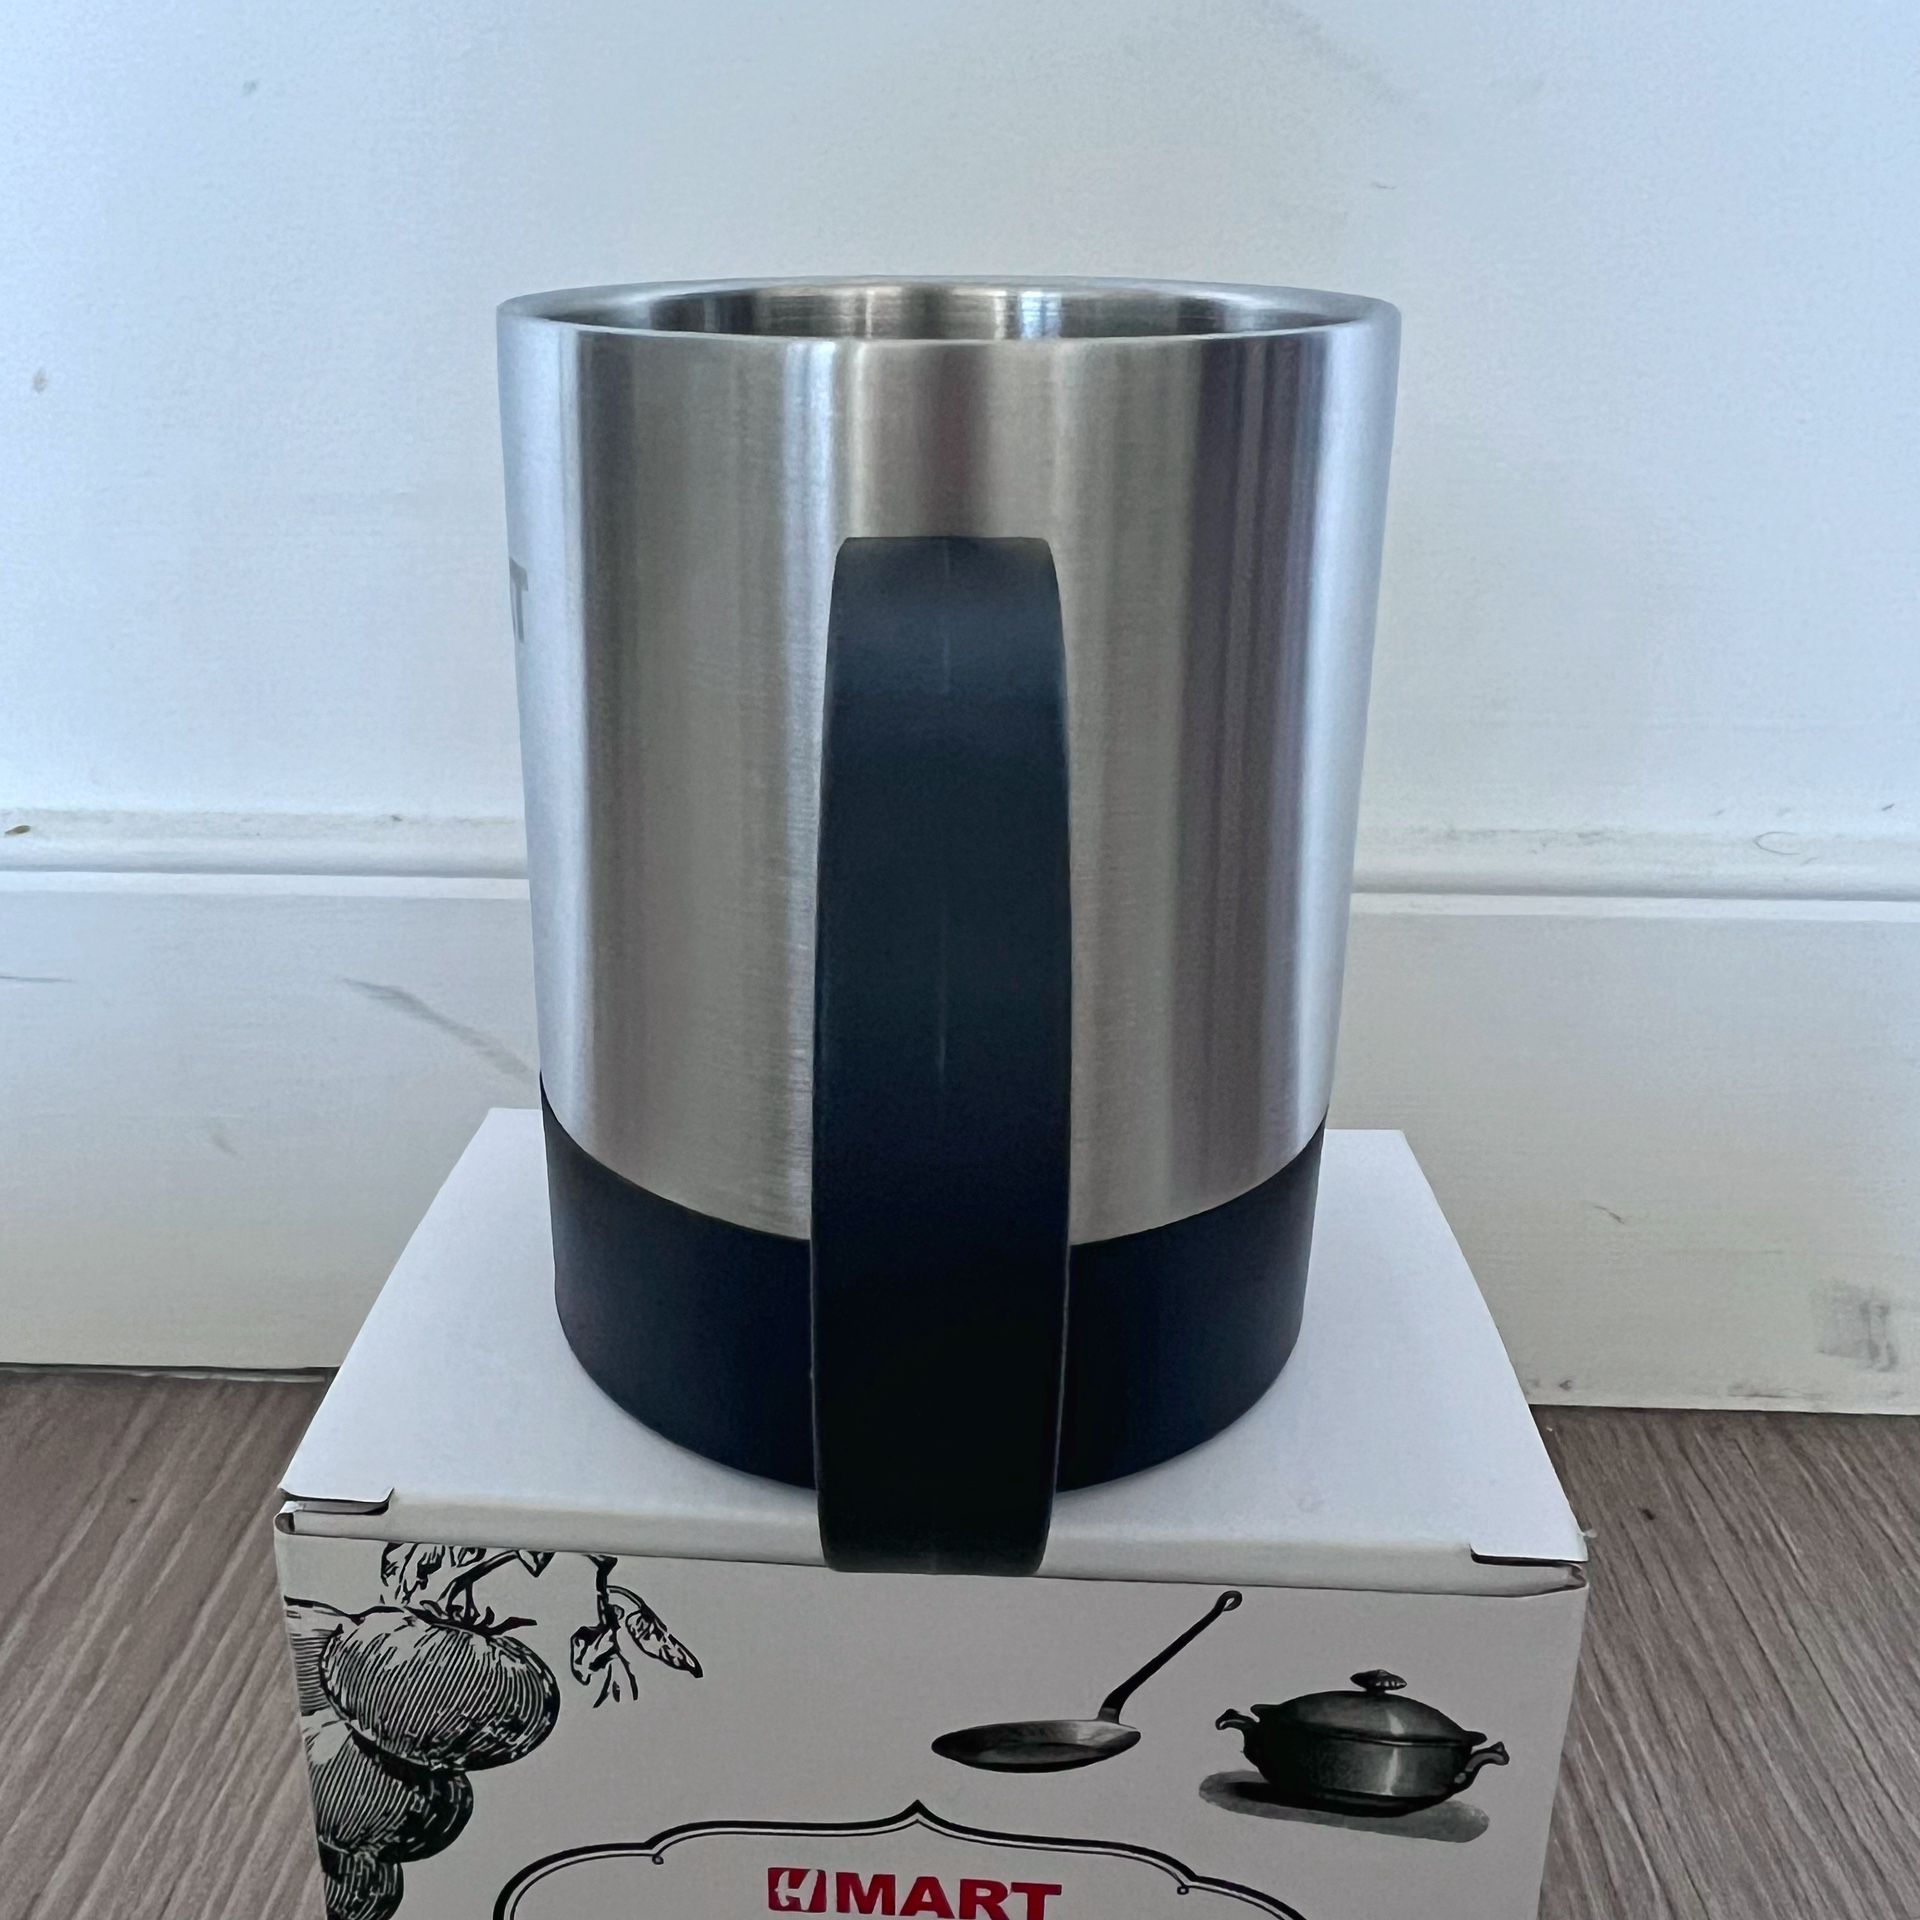 KH Milkshake Cup Stainless Steel - KH Hospitality Imports